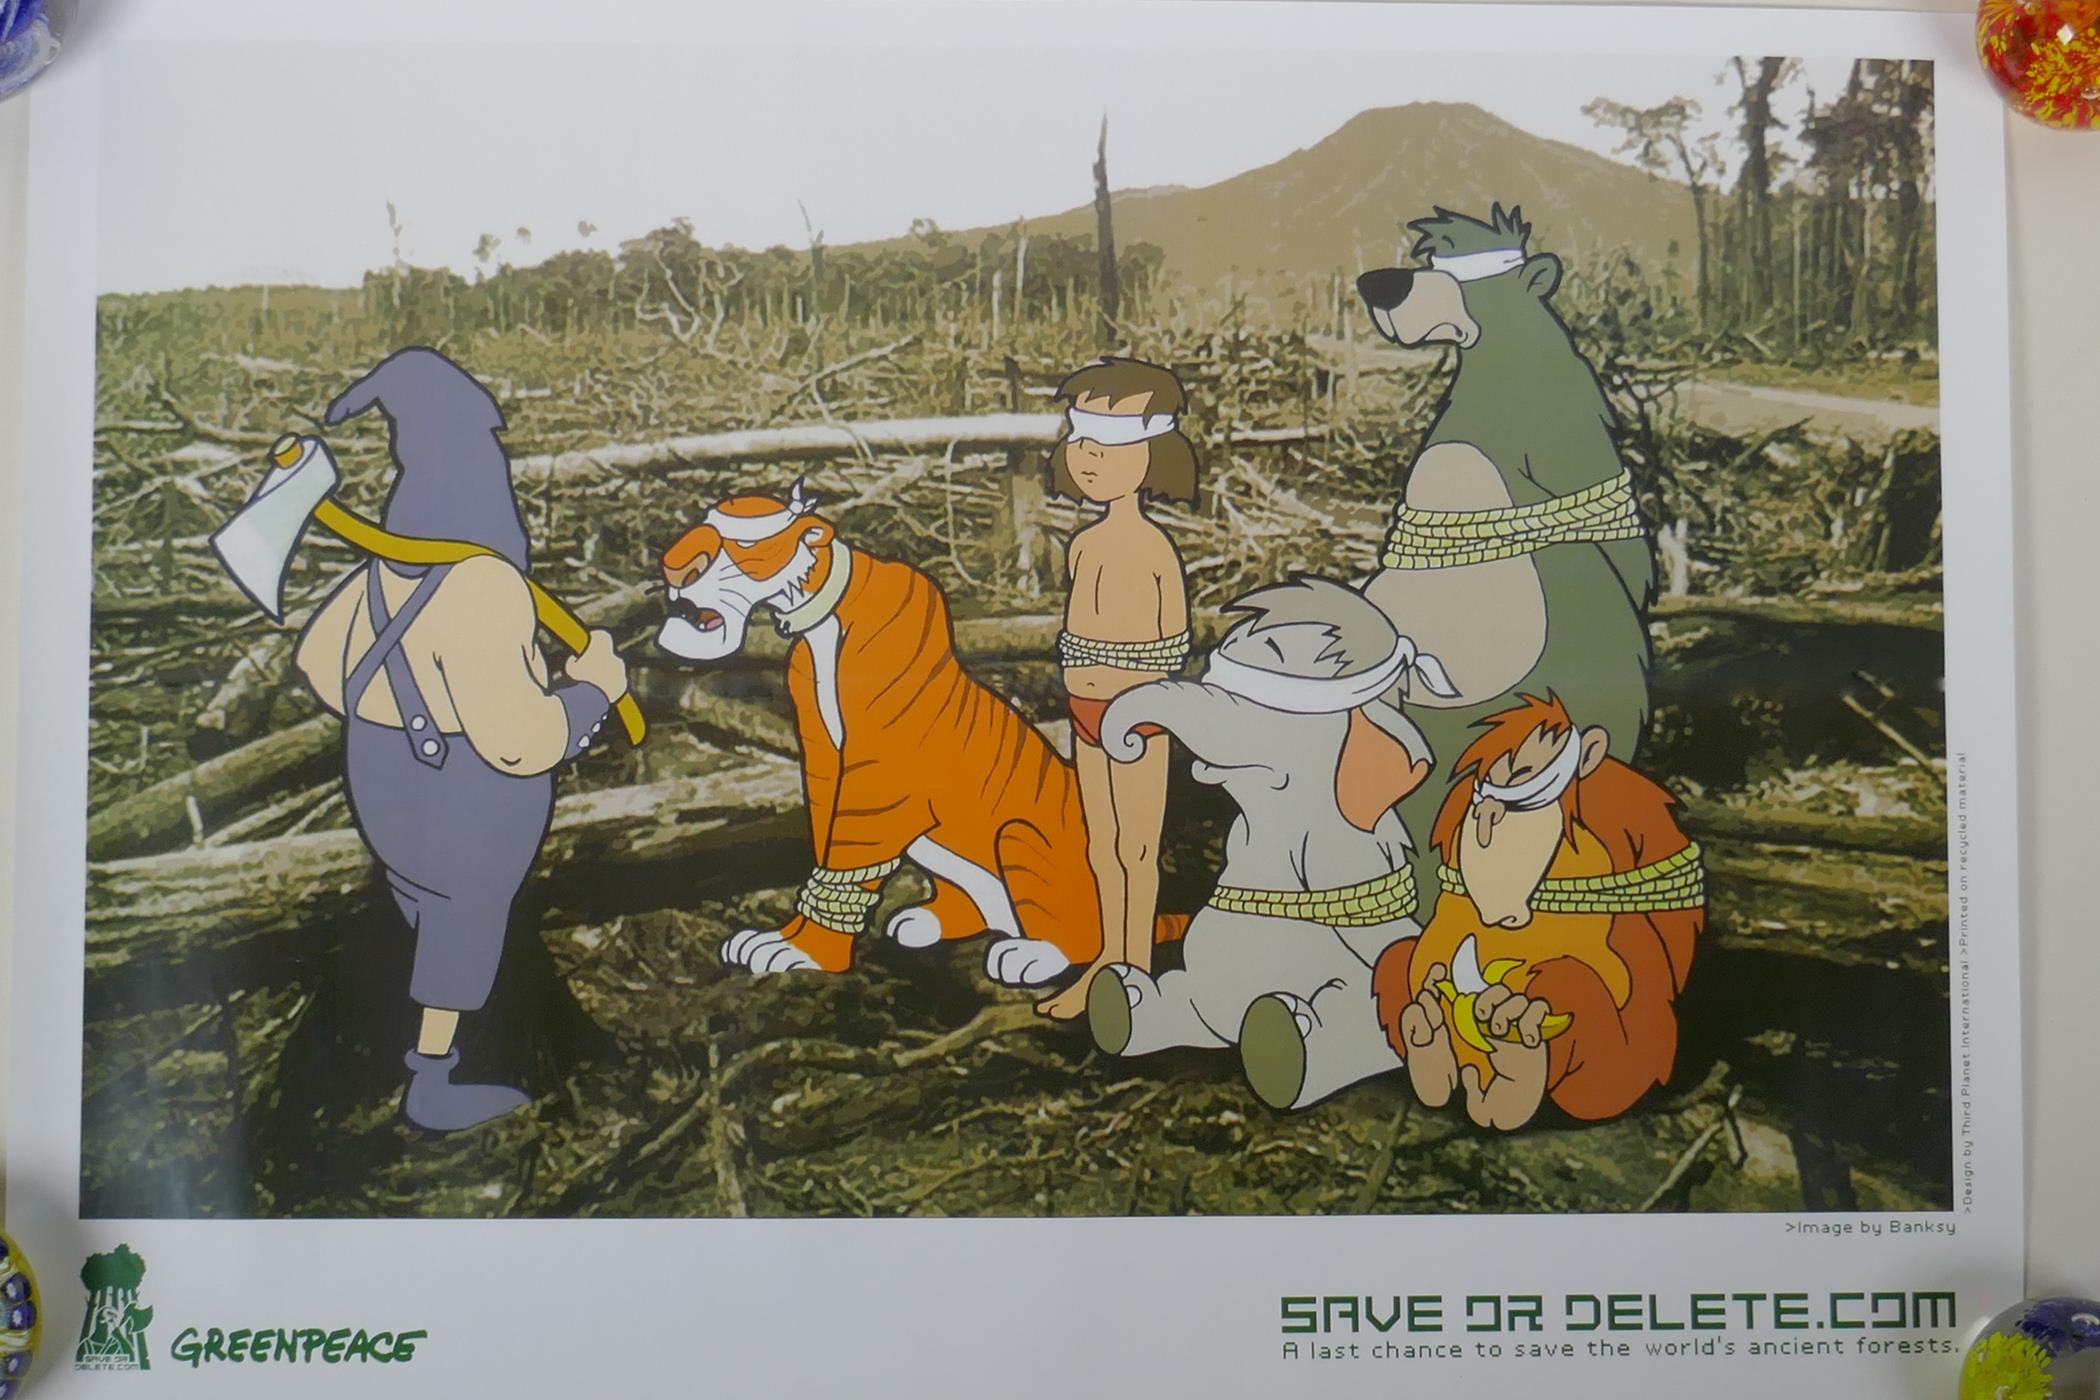 After Banksy, Save or Delete, 2002, Greenpeace, digital print, 59 x 42cm - Image 2 of 2